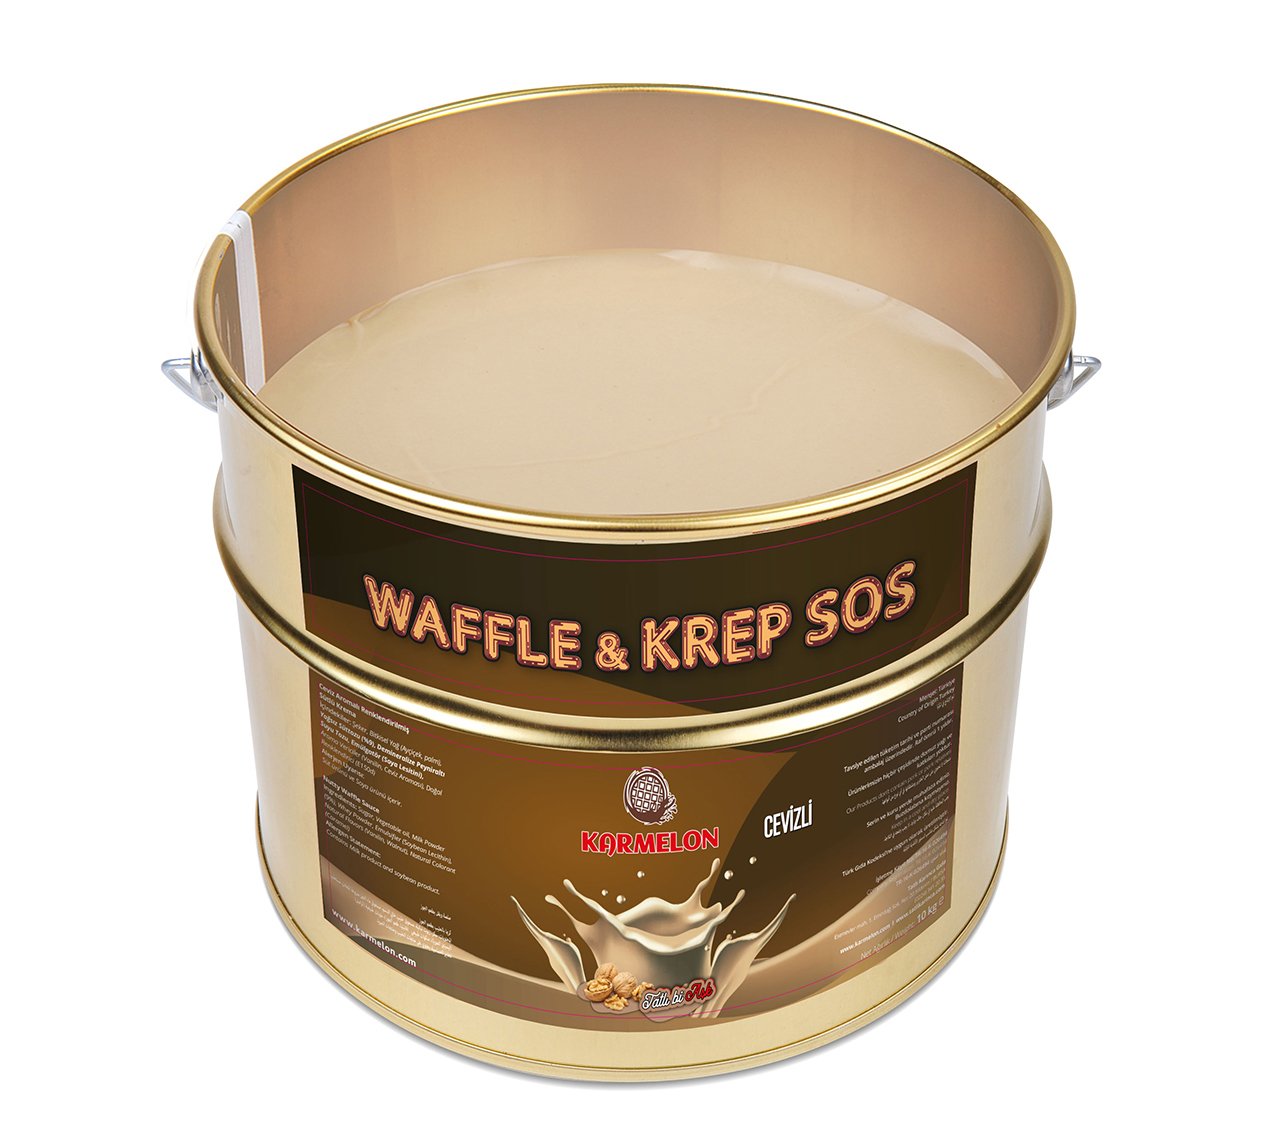 Cevizli Waffle Sosu - 10 kg